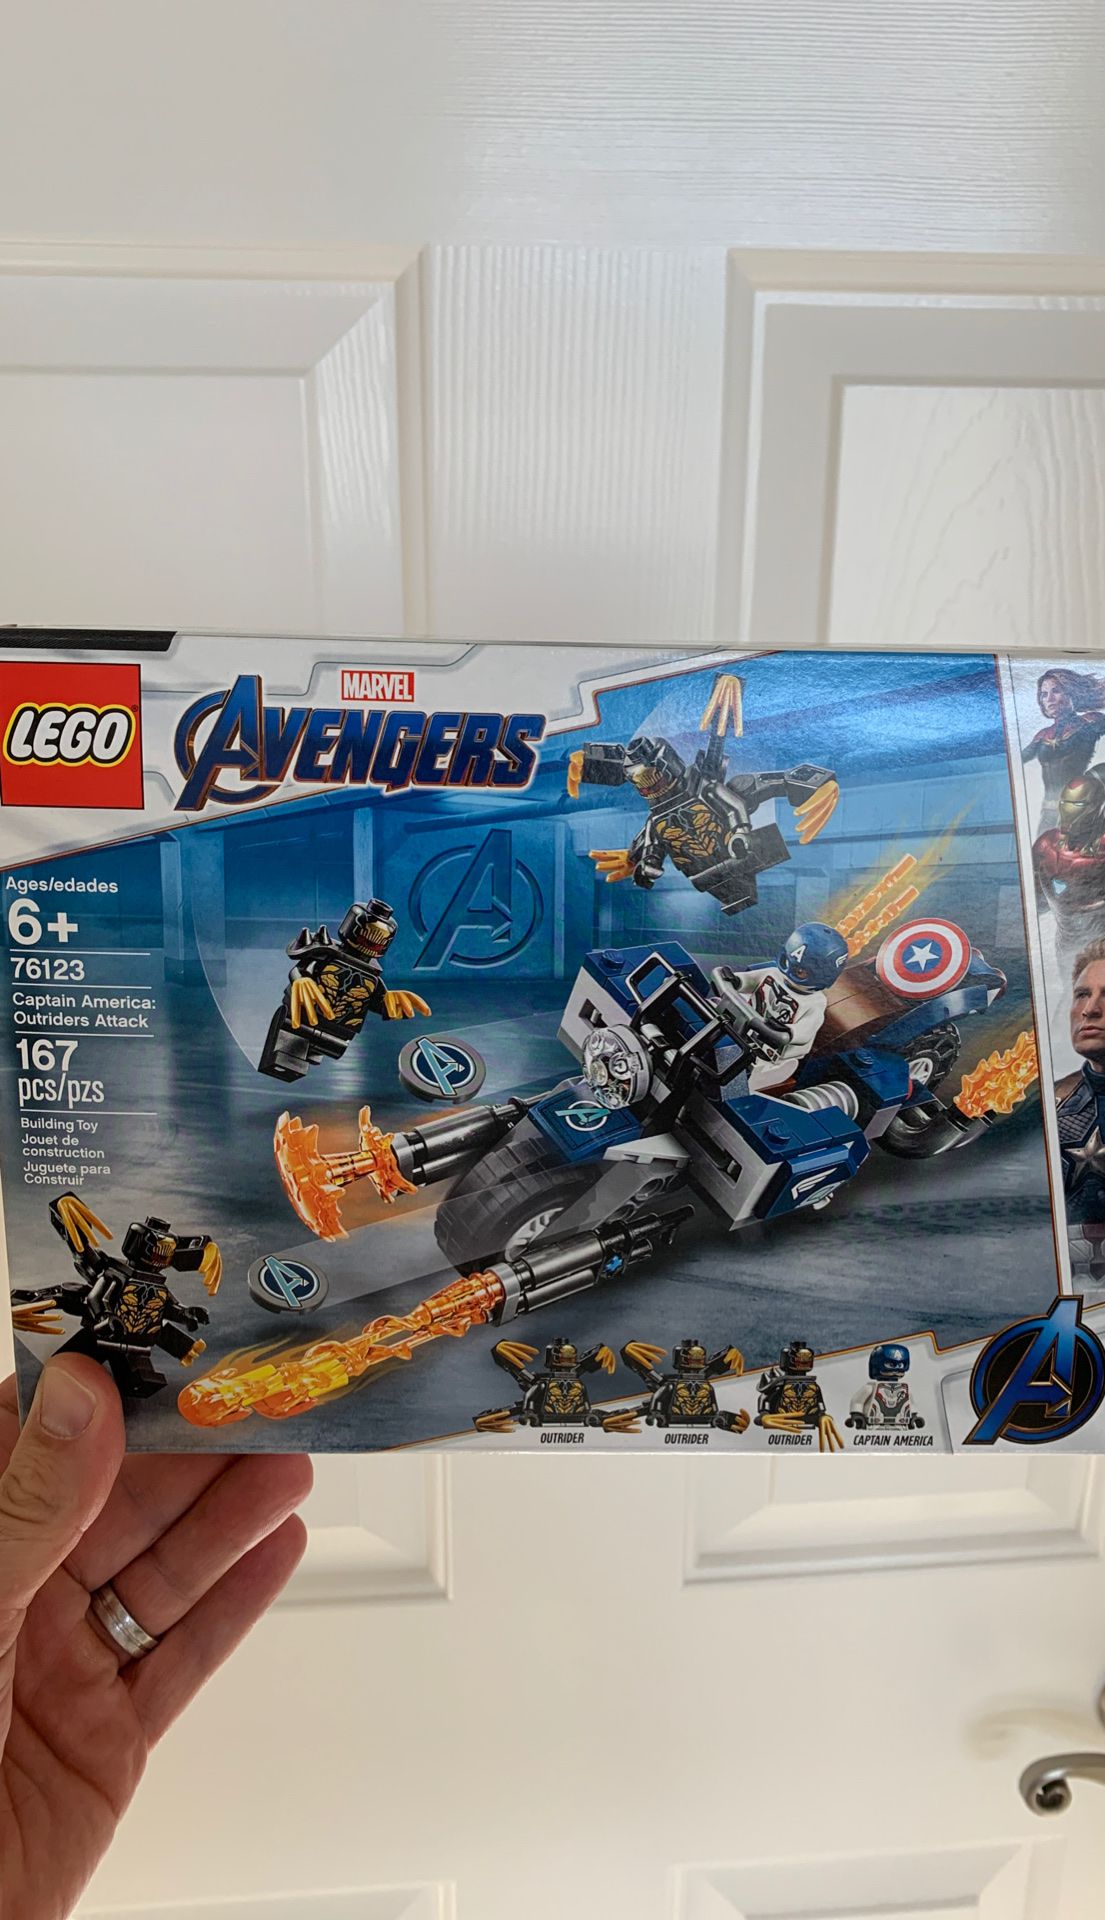 LEGO Avengers Captain America set 76123